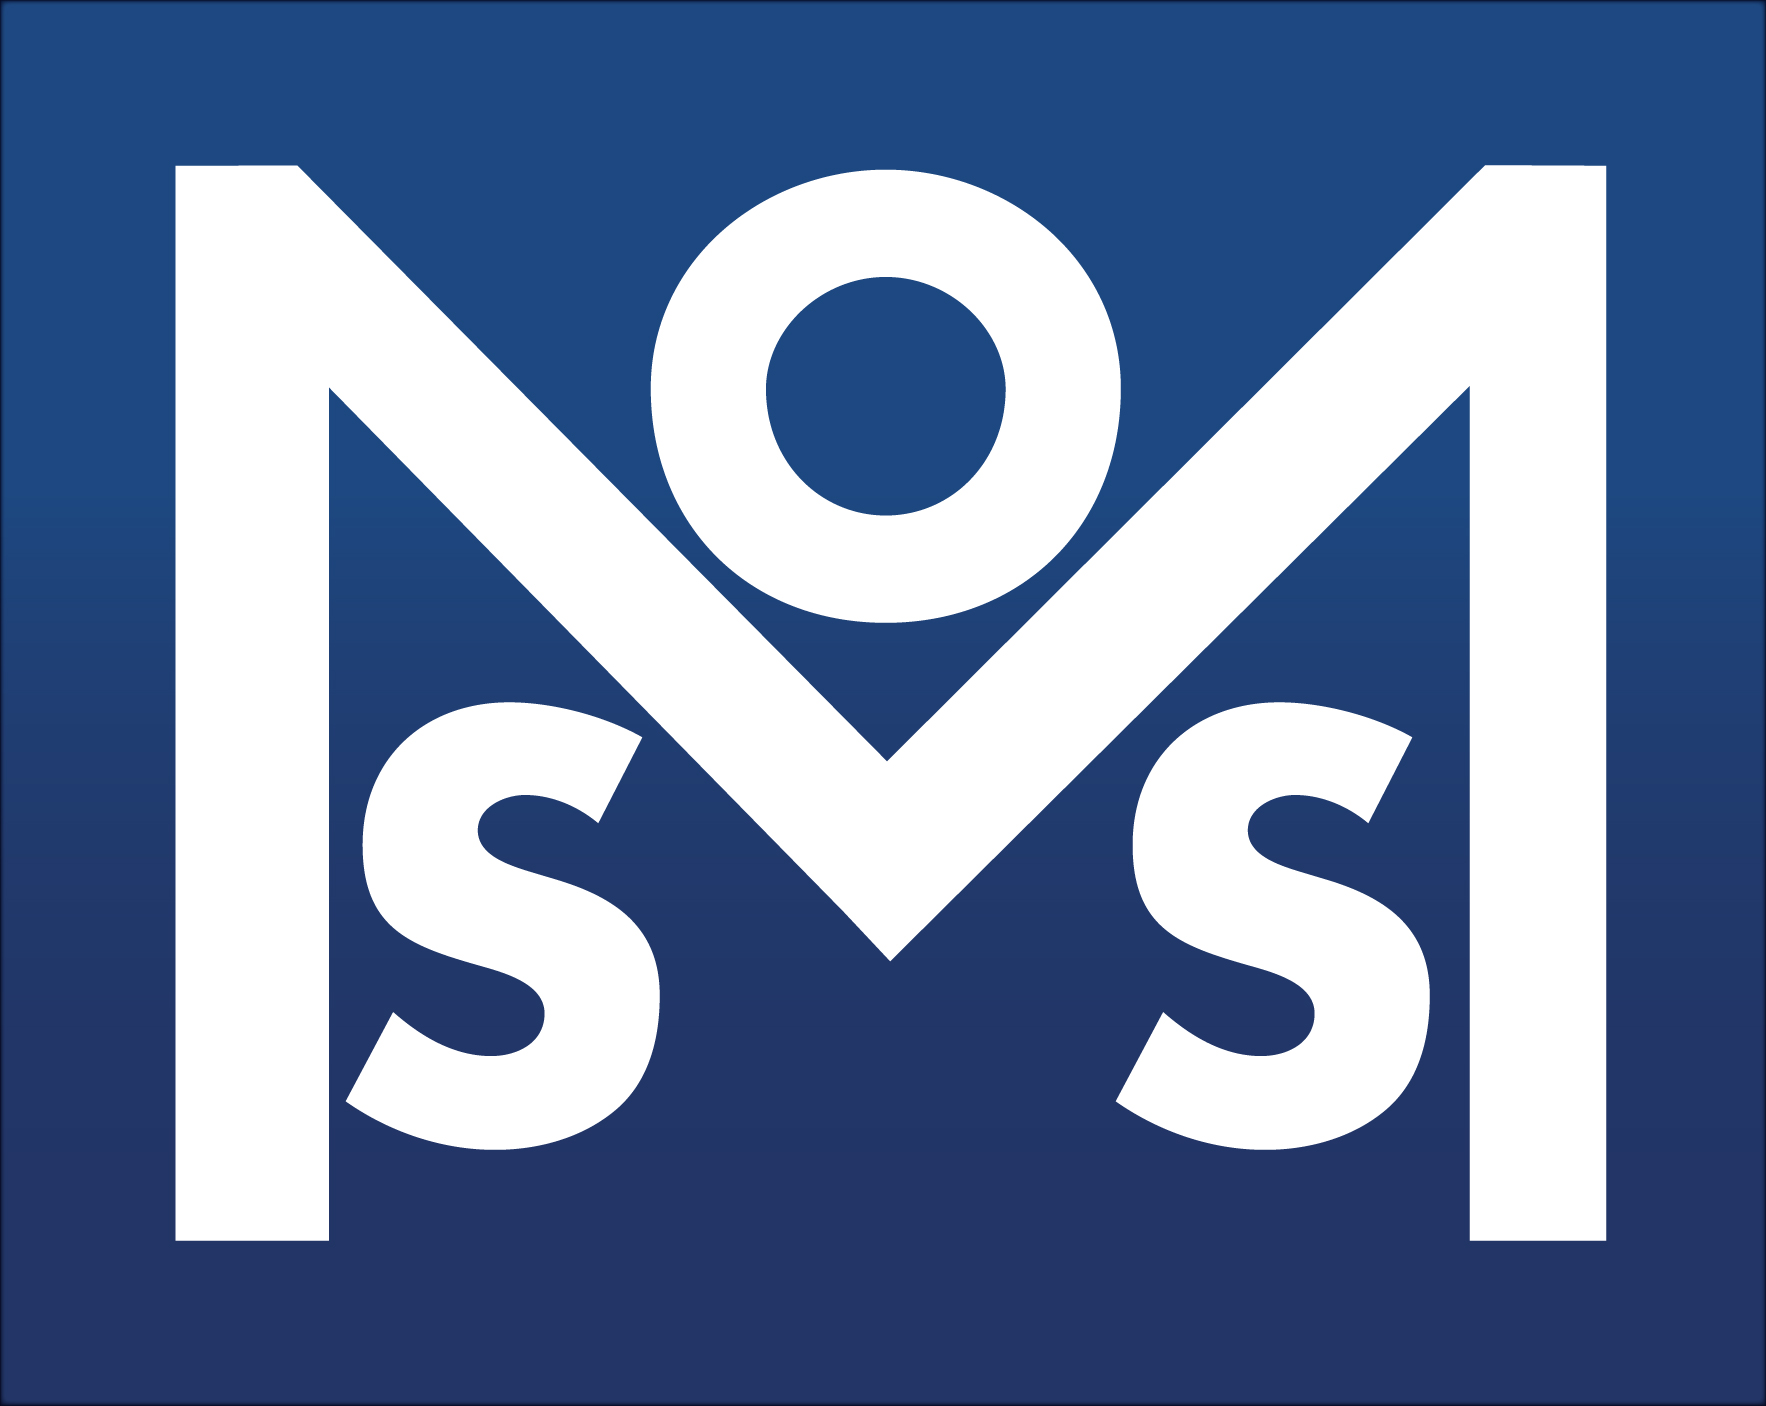 Moss Electrical Co. Ltd